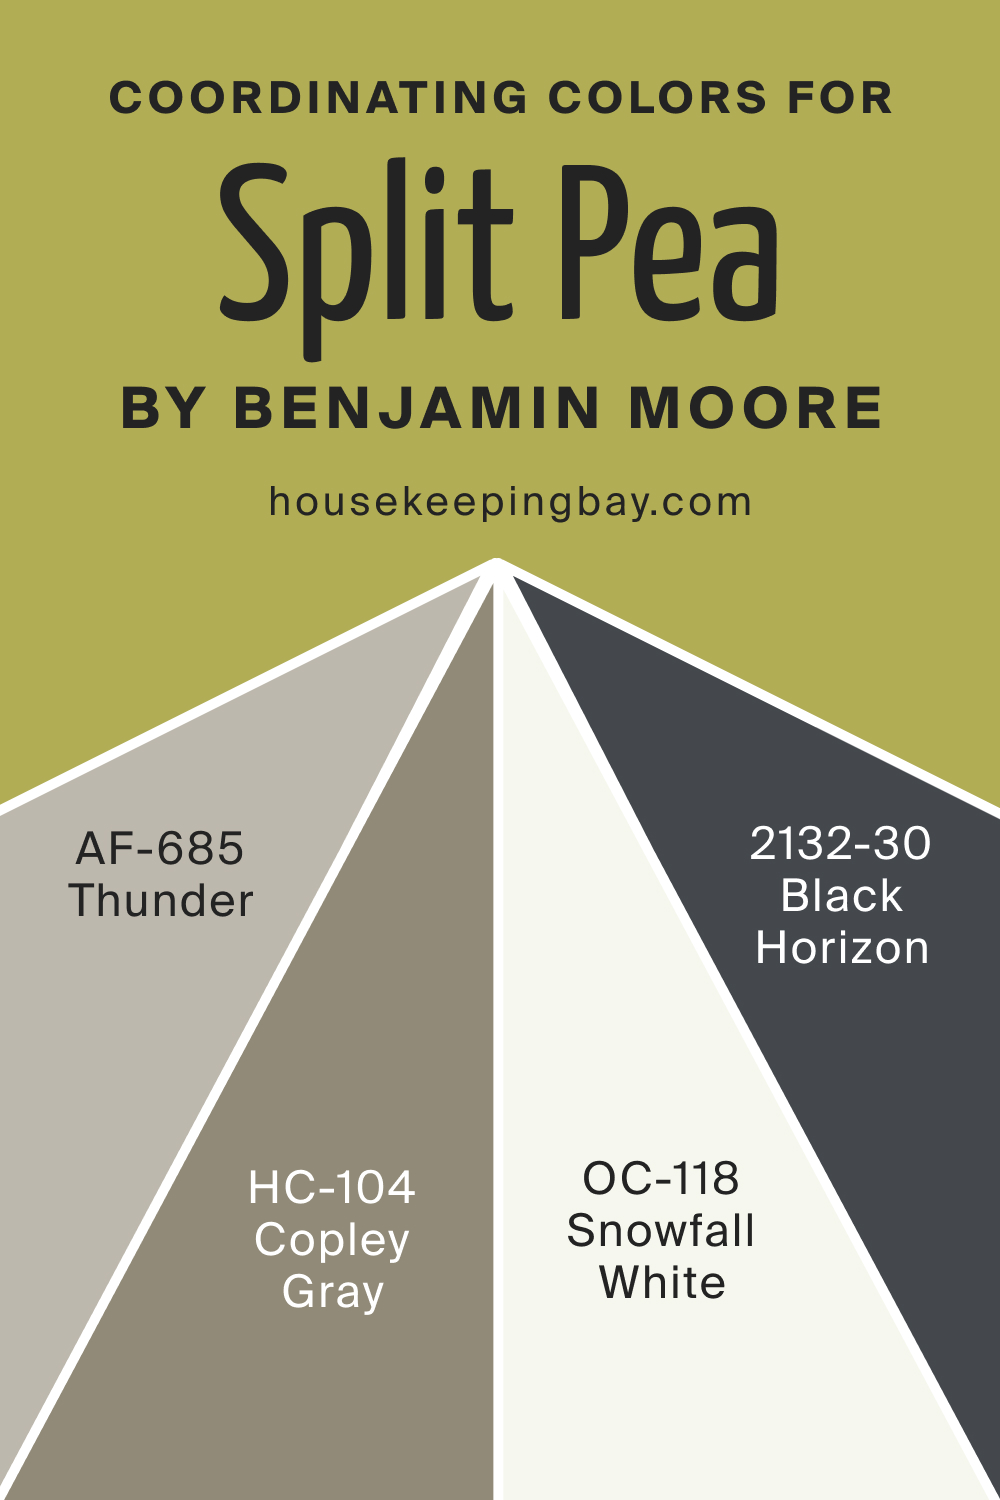 Coordinating Colors of Split Pea 2146-30